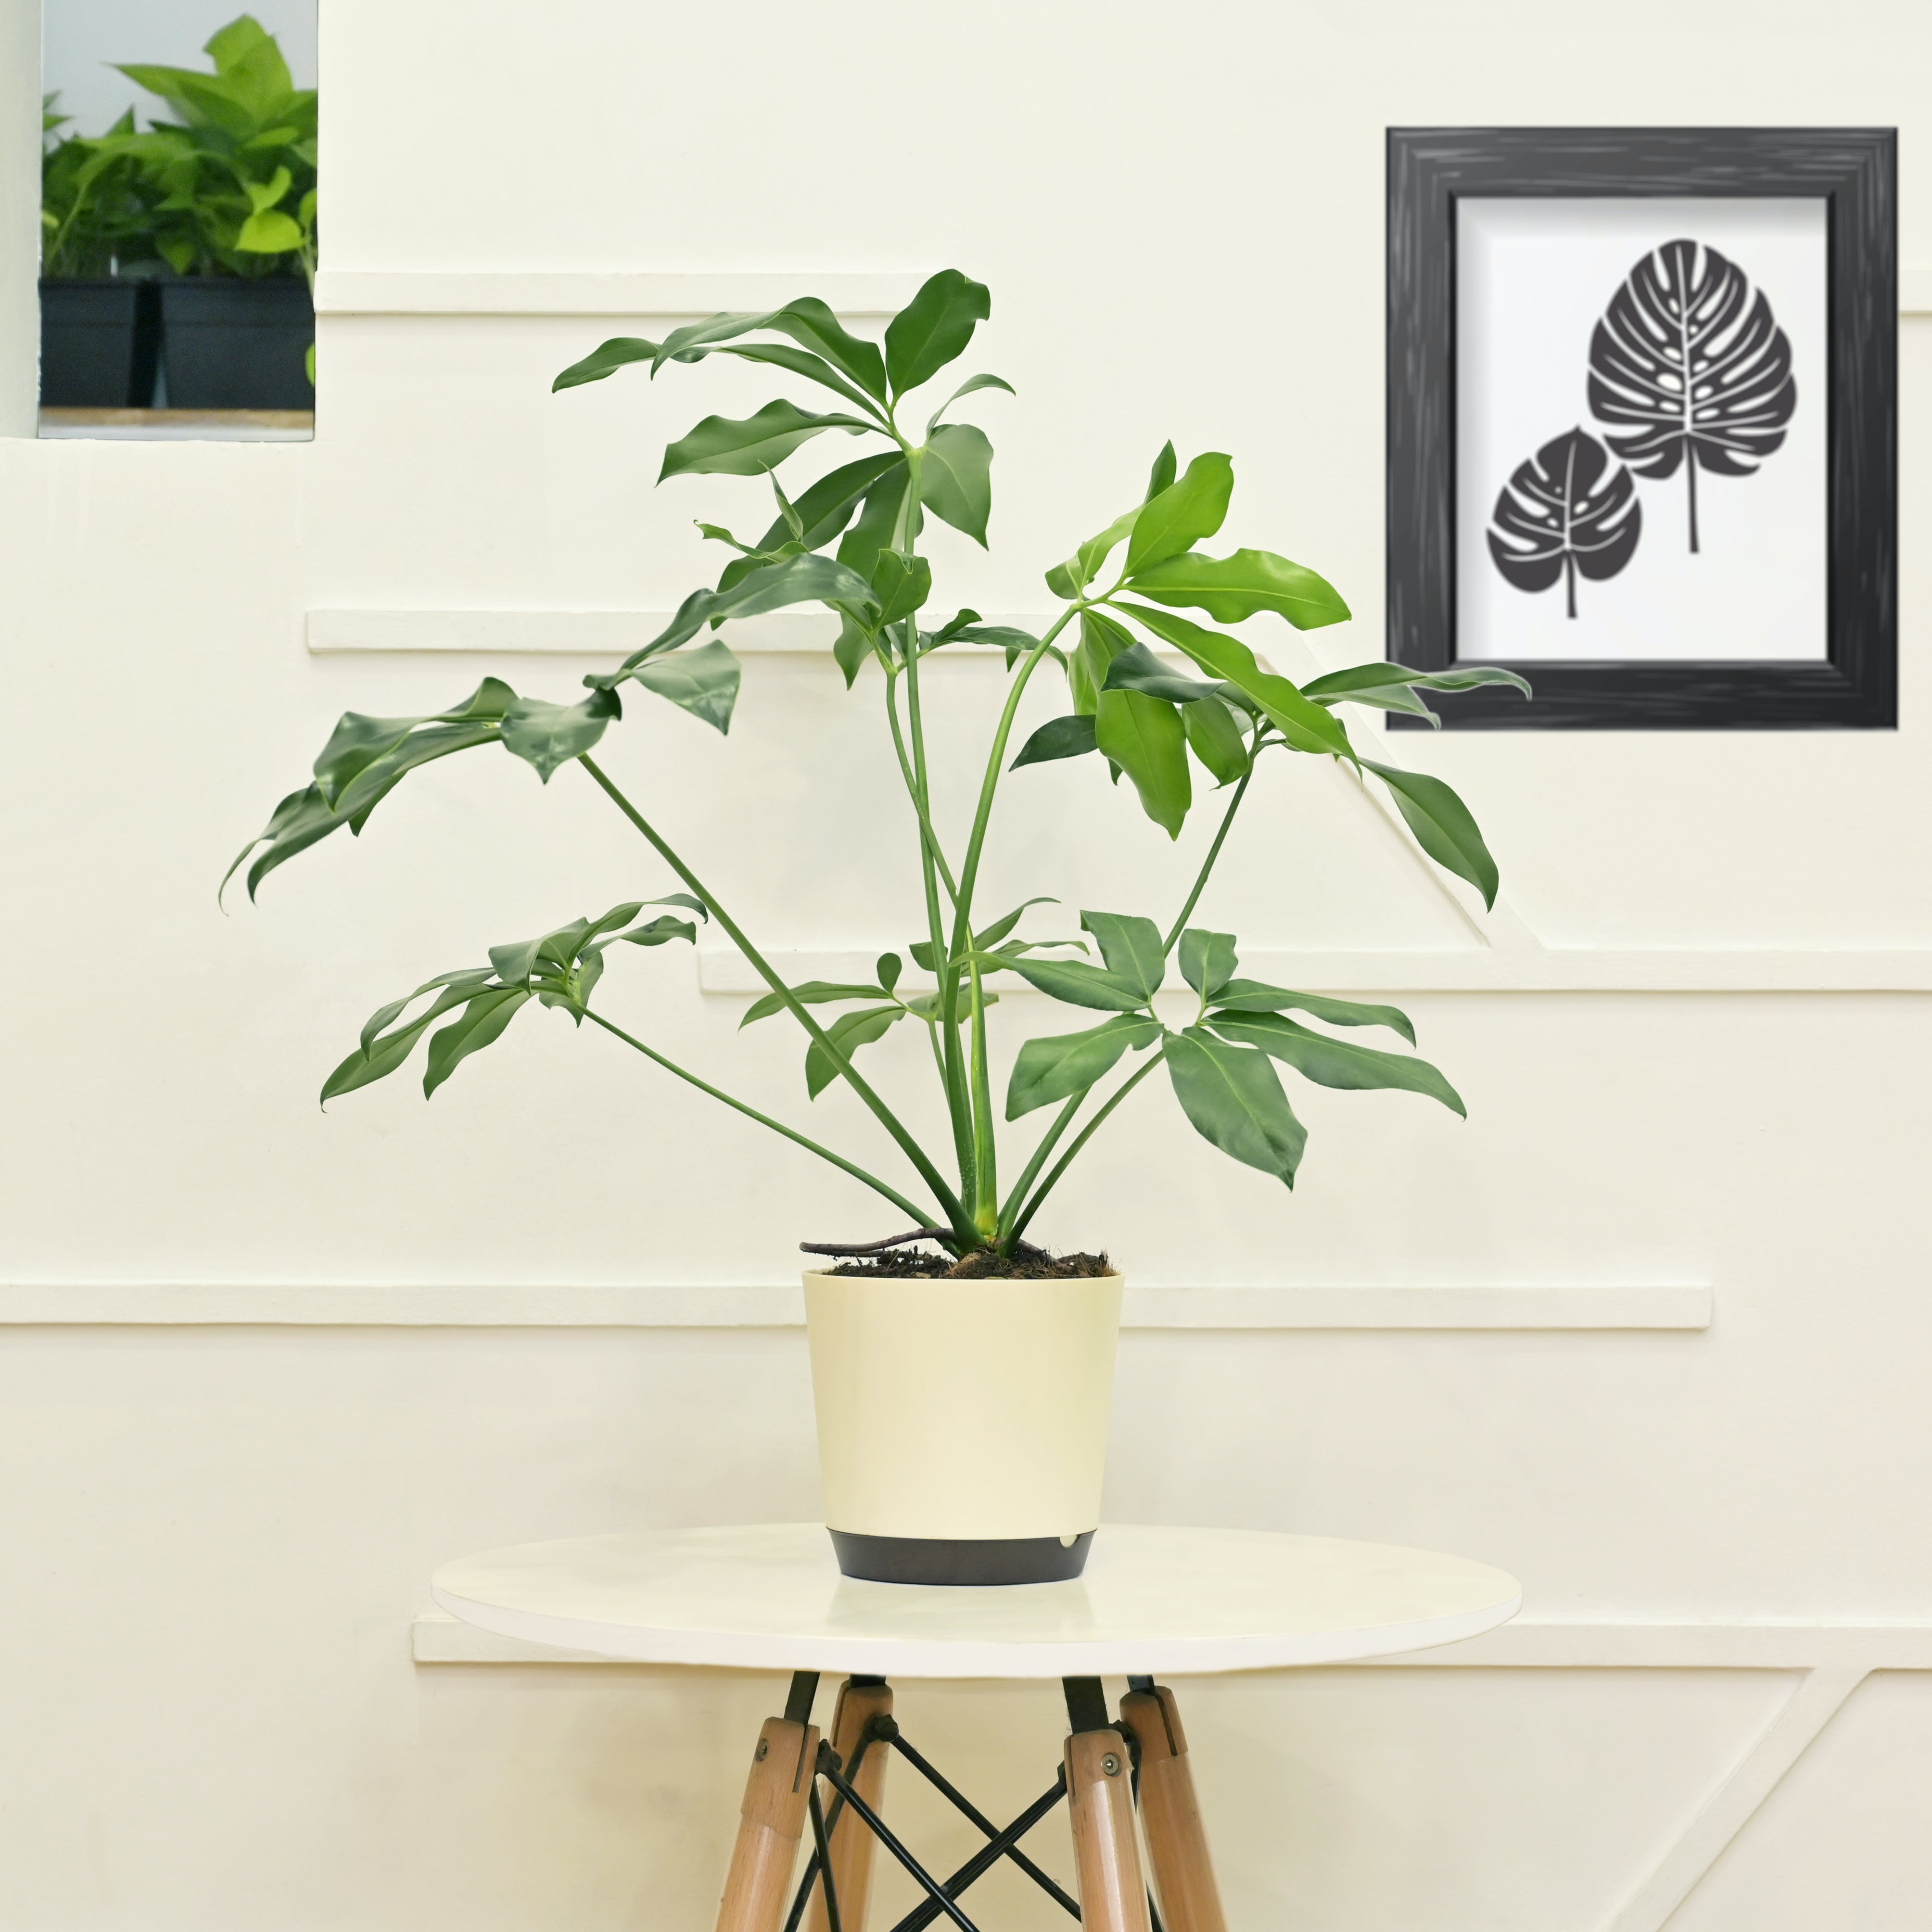 Leaf,Wall,Flowerpot,Botany,Invertebrate,Houseplant,Interior design,Design,Vase,Plant stem